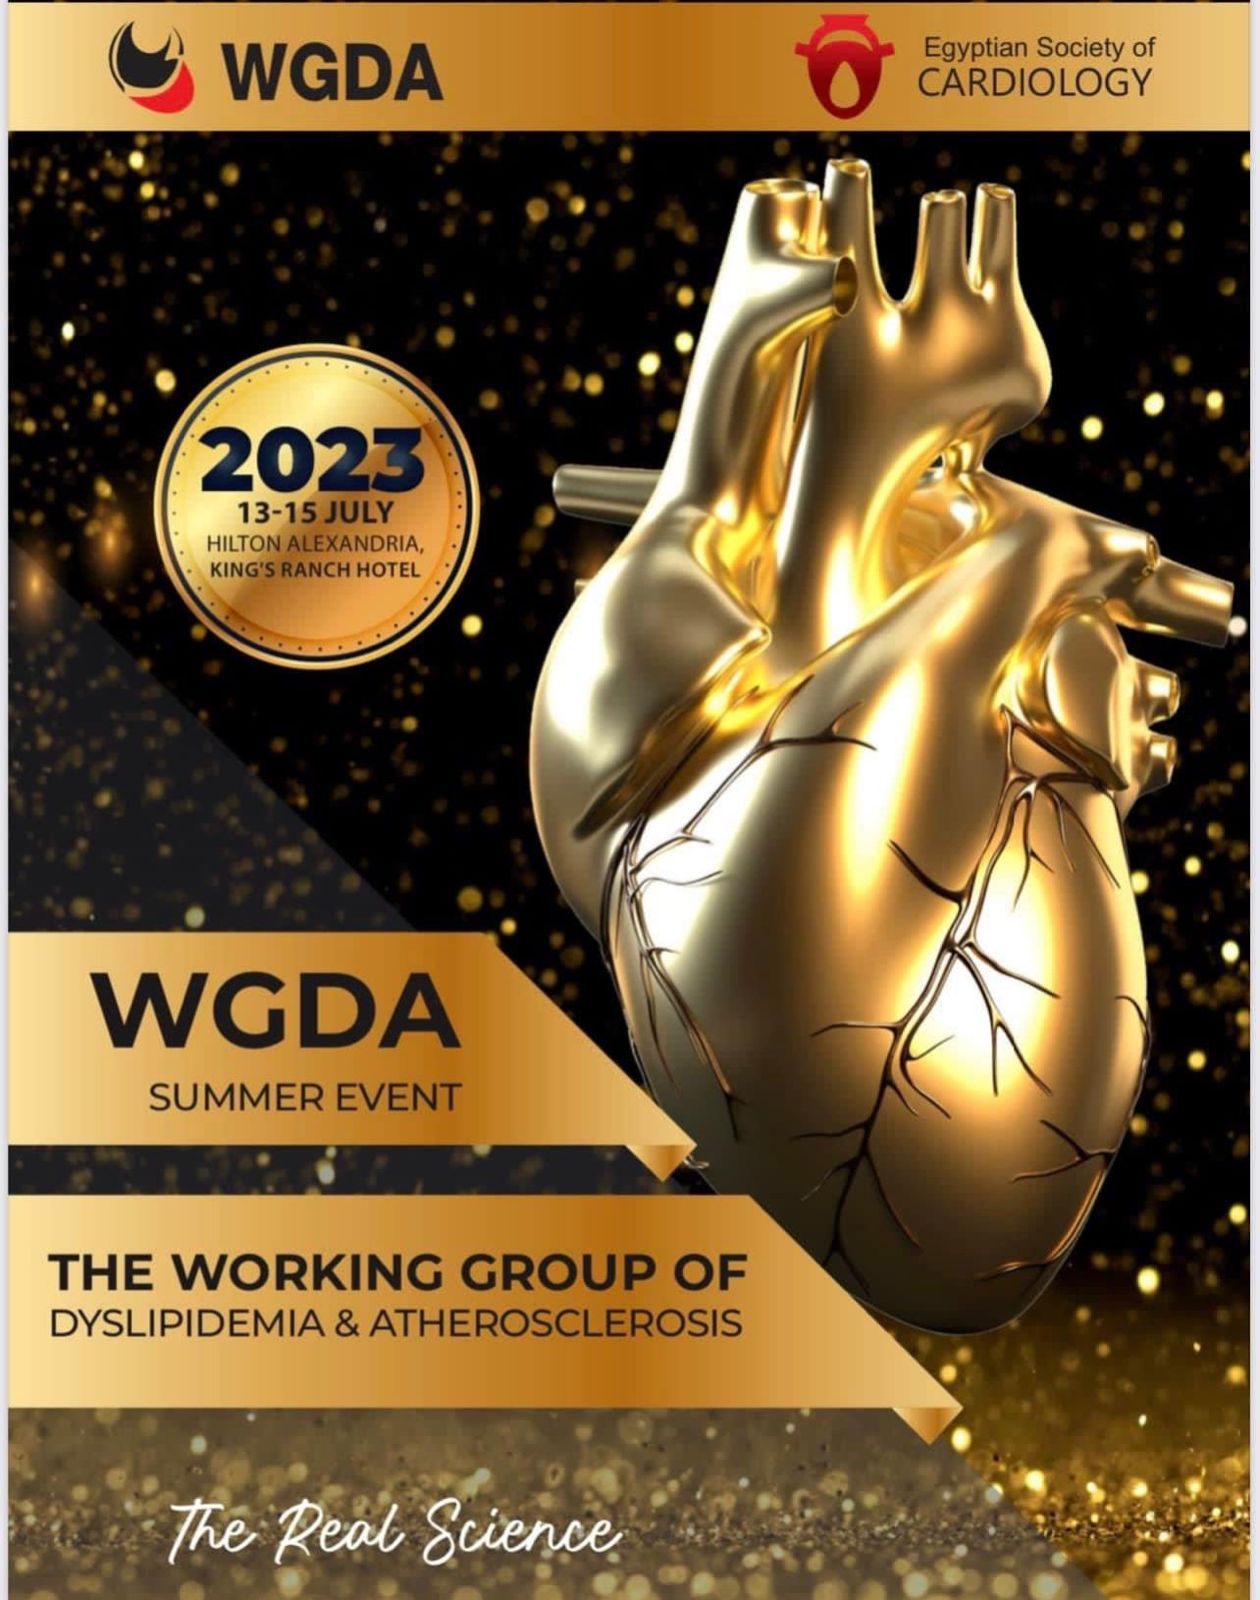 IMG 20230717 WA0029 «شعبة الكولسترول » بجمعية القلب المصرية تناقش في مؤتمرها السنوي استخدام الذكاء الاصطناعي في أمراض القلب